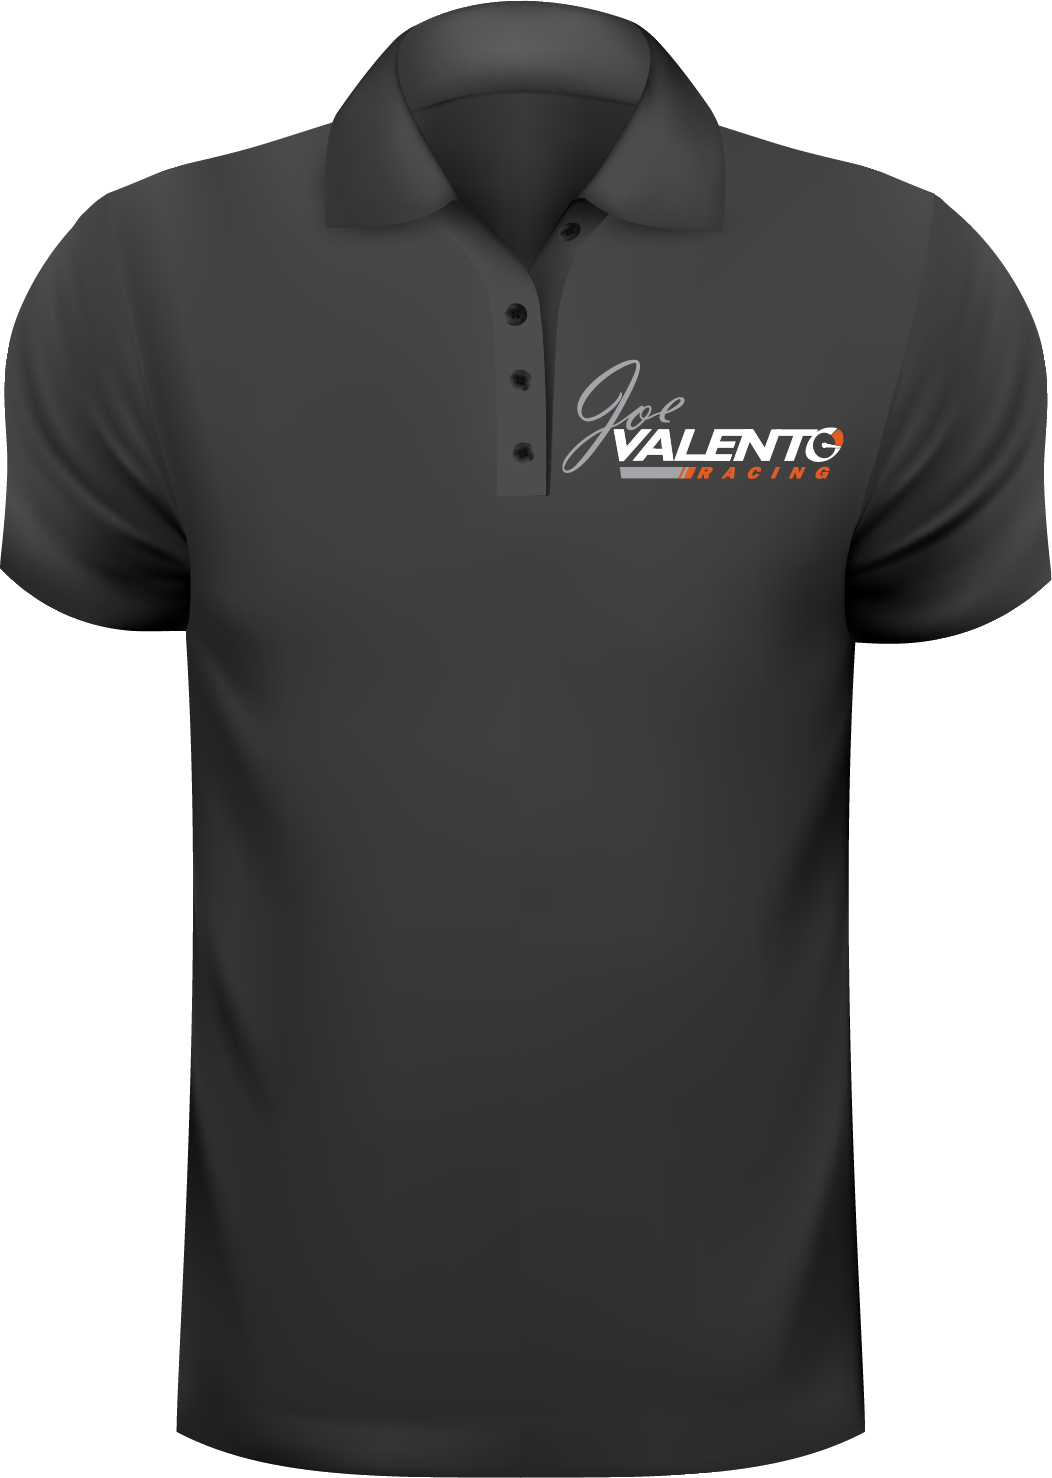 Joe Valento Embroidered Polo Shirt